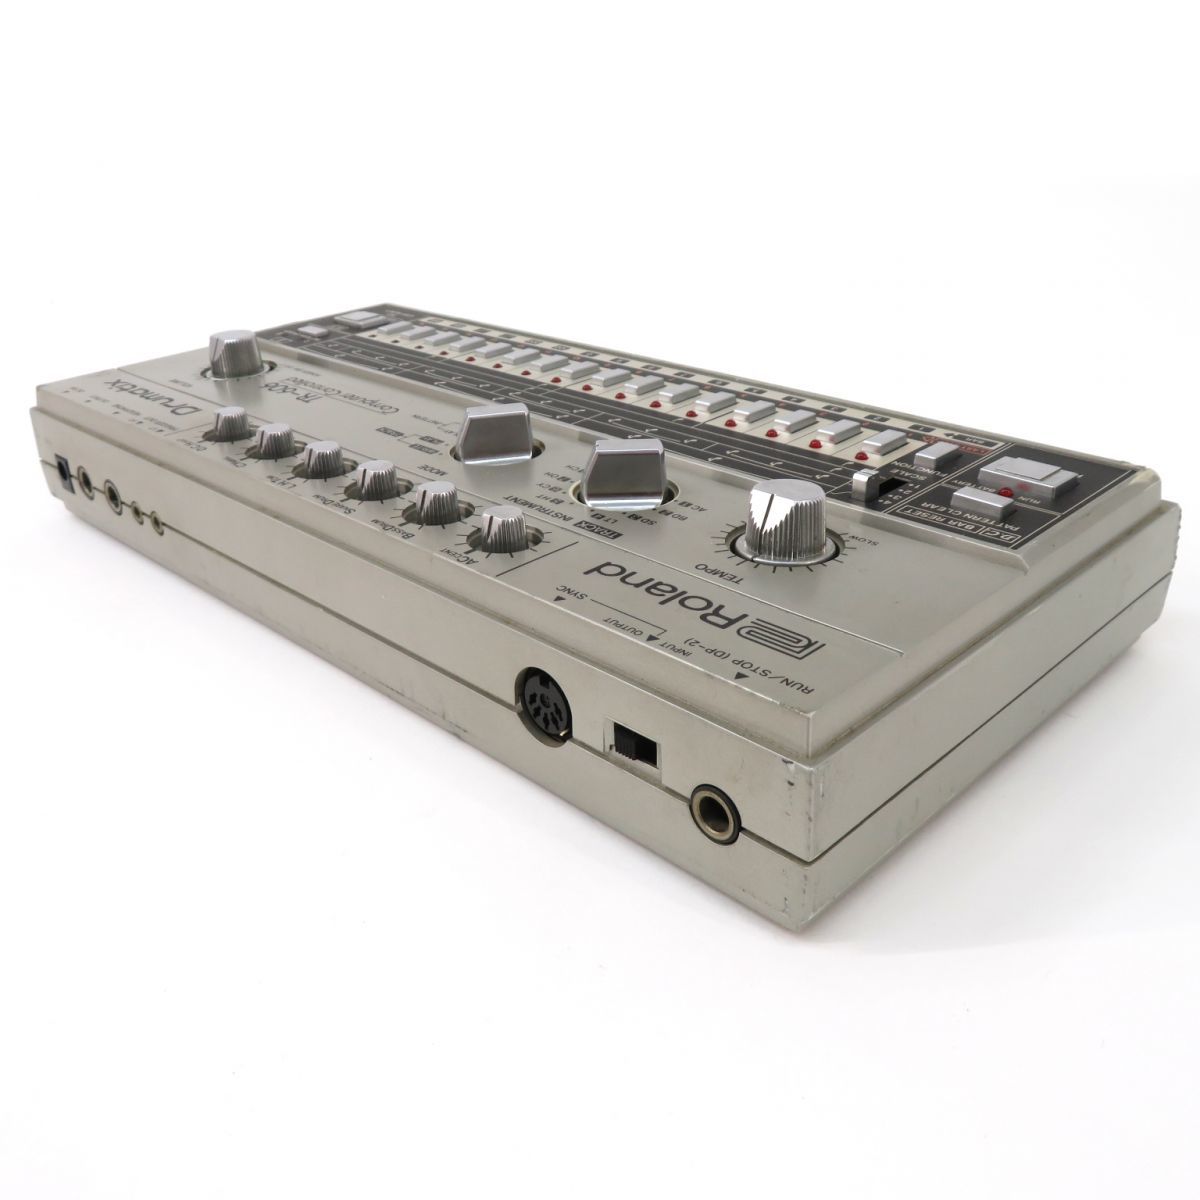 095s*Roland Roland TR-606 Drumatix rhythm machine * used 